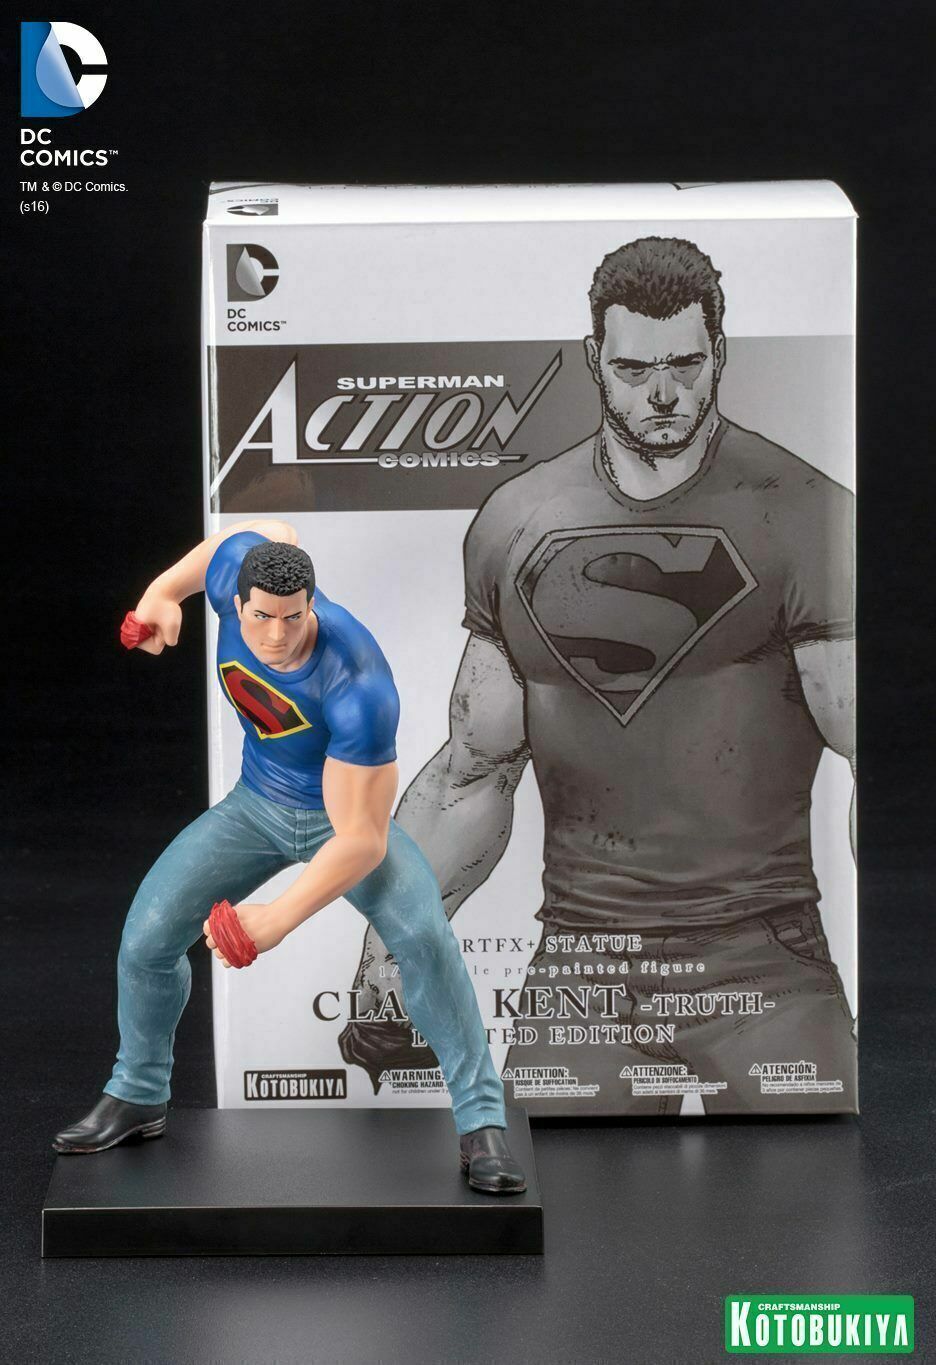 Kotobukiya Clark Kent Truth ArtFX+ Statue Superman 1:10 DC Comics LE SDCC 2016